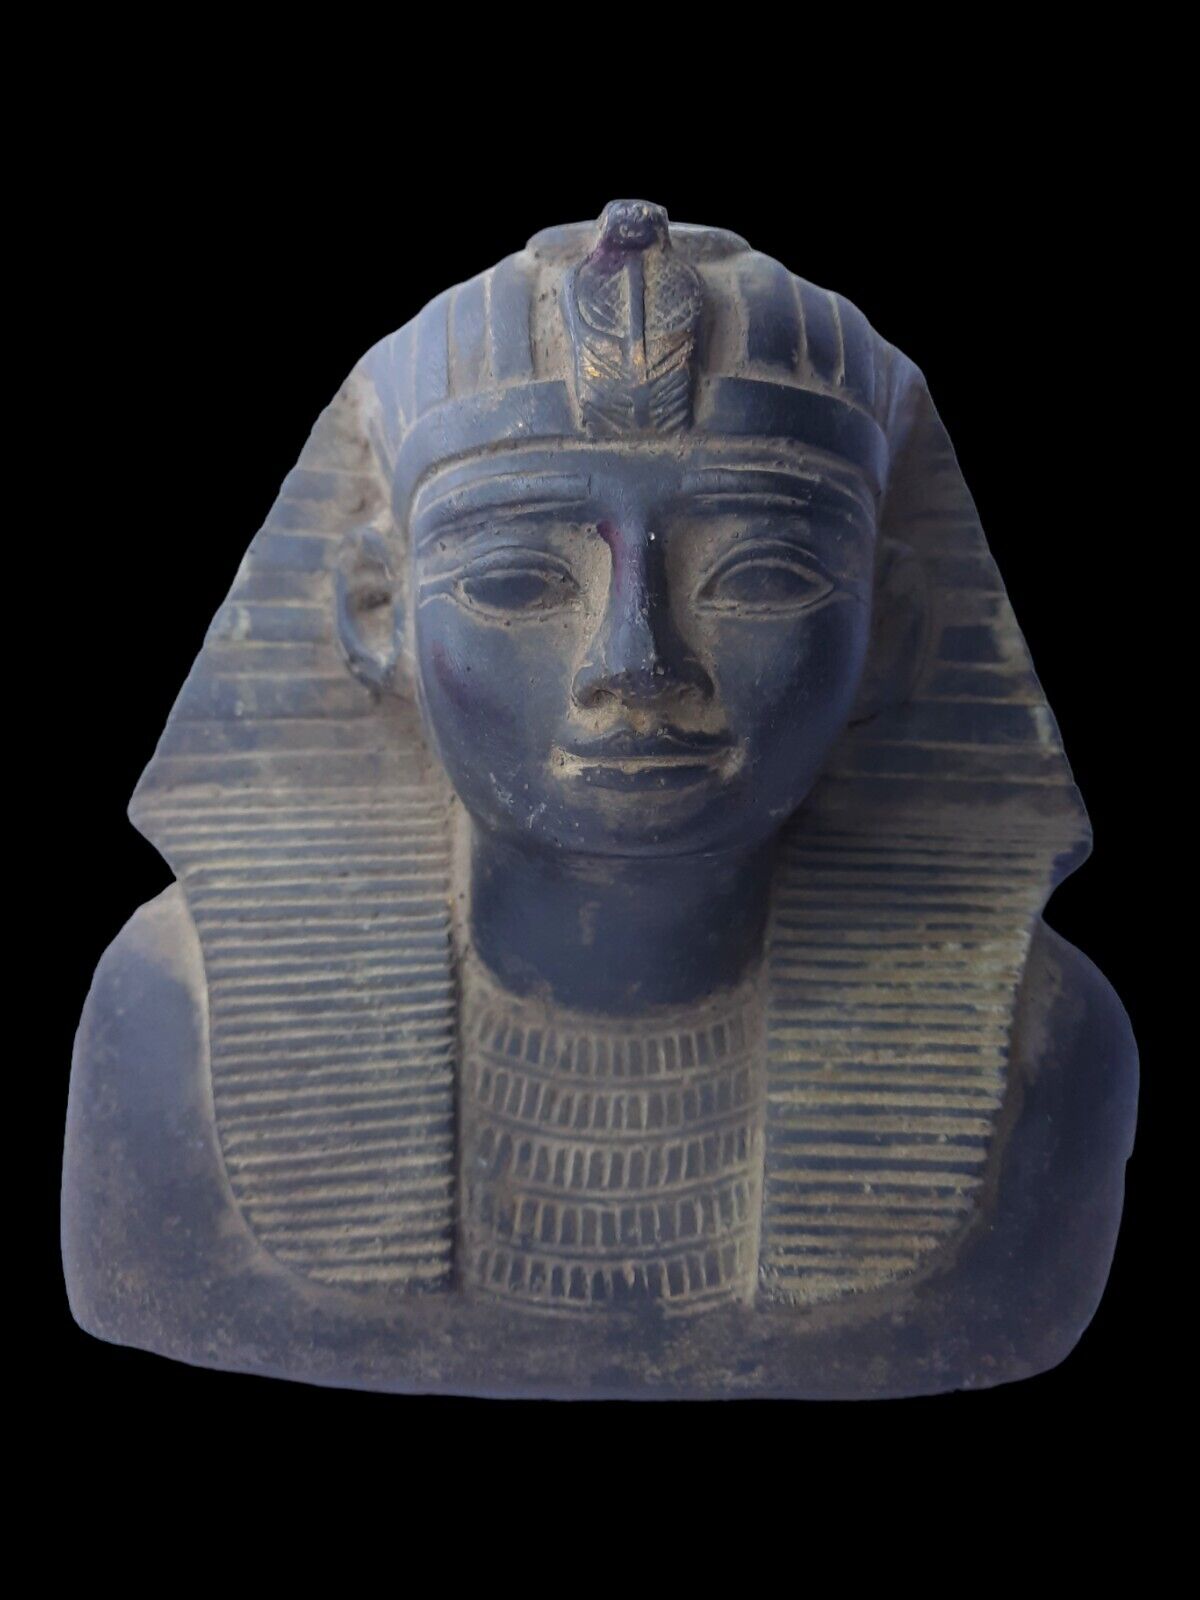 UNIQUE ANTIQUE ANCIENT EGYPTIAN Heavy Stone Bust King Ramses Good Hieroglyphic